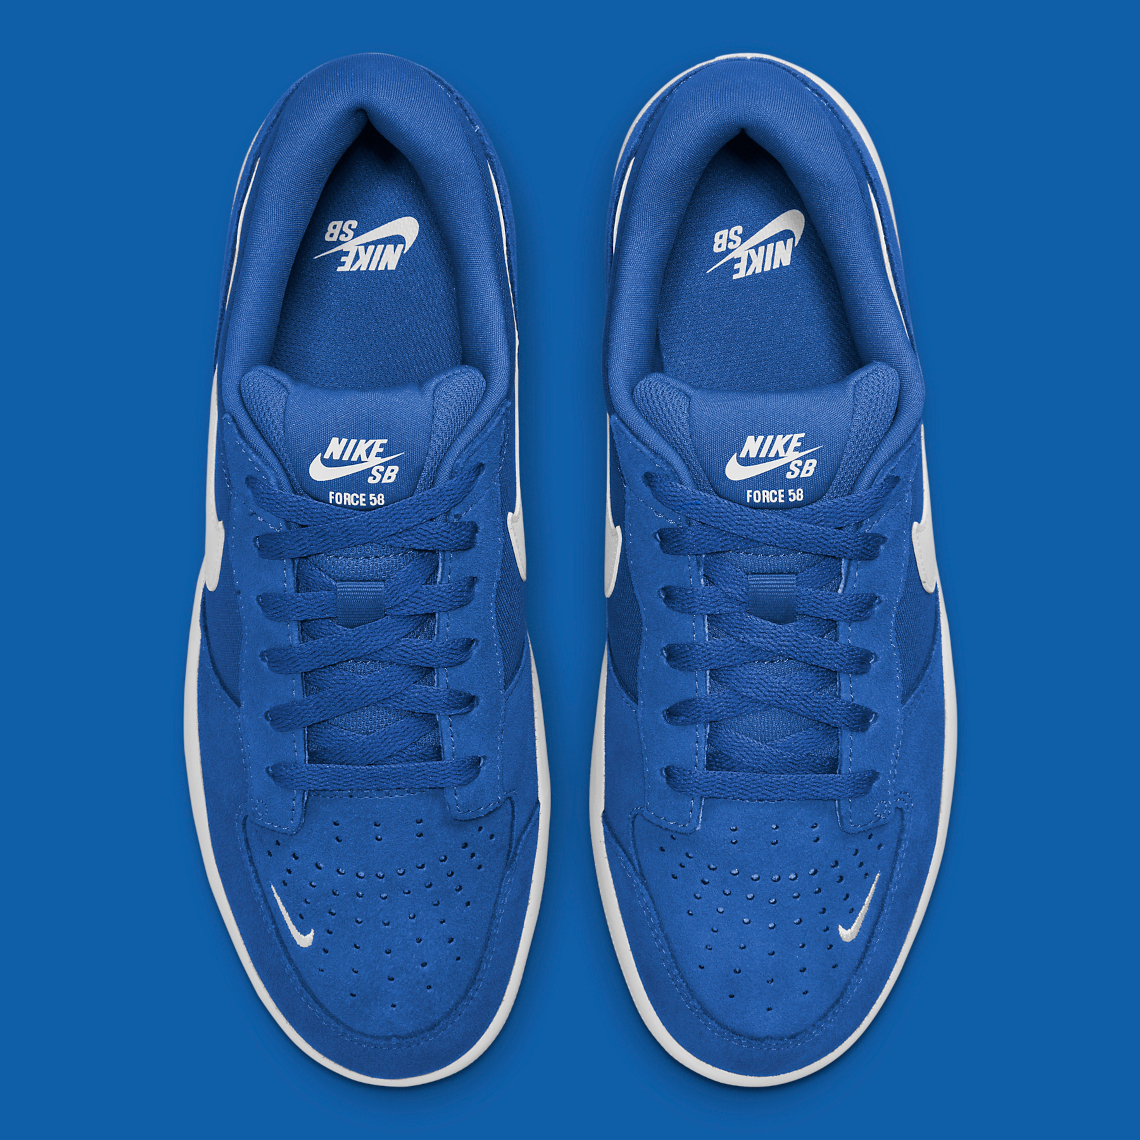 Nike Sb Force 58 Blue Cz2959 401 8